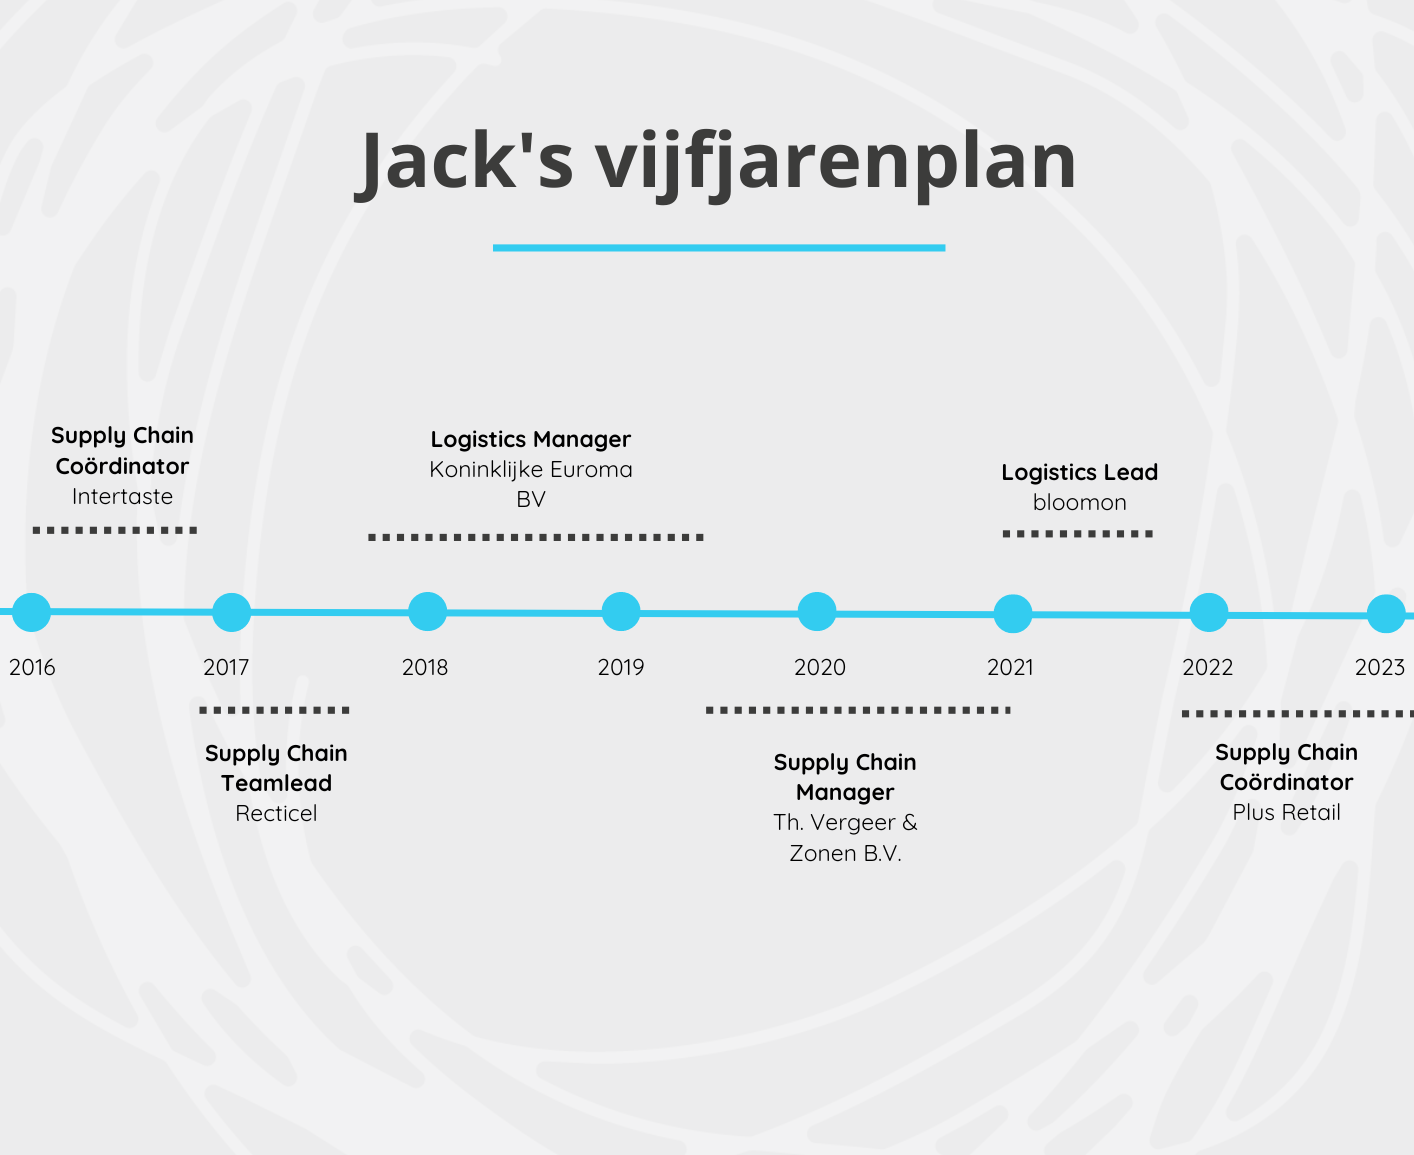 Jack's vijfjarenplan Supply Chain Manager